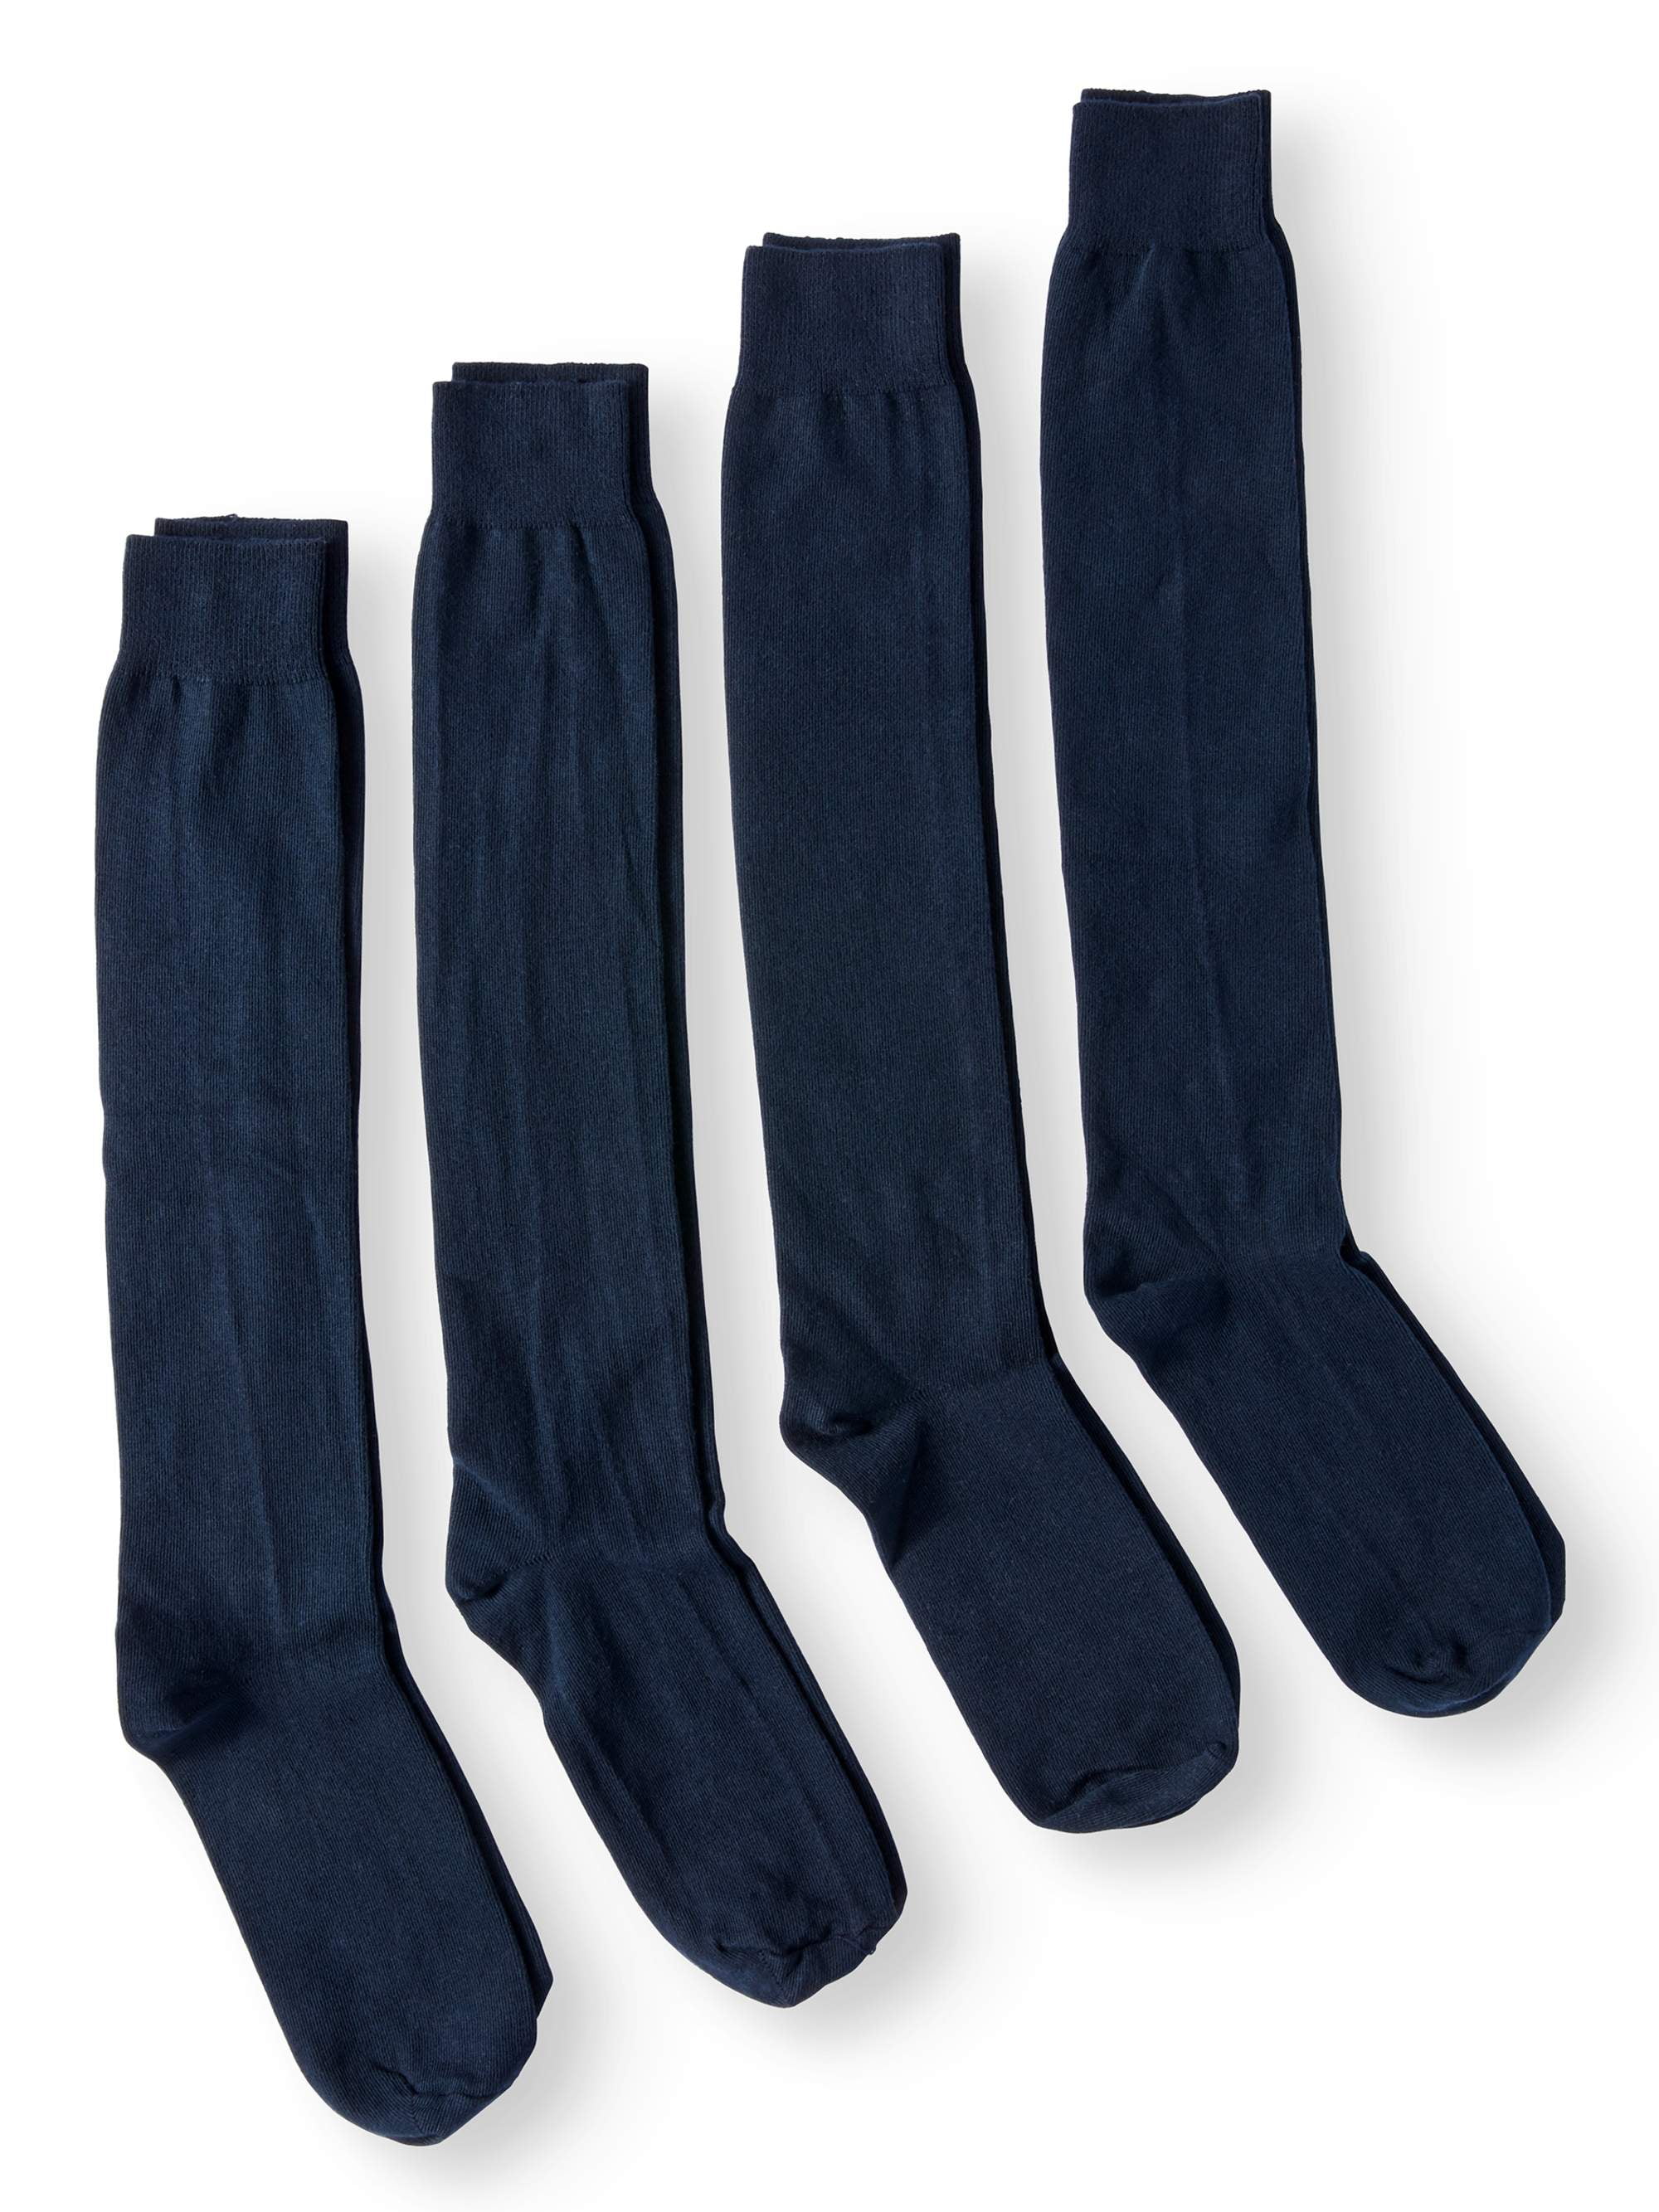 Jefferies Socks Girls Knee High School Uniform Socks 4-Pack, Sizes 4-14 ...